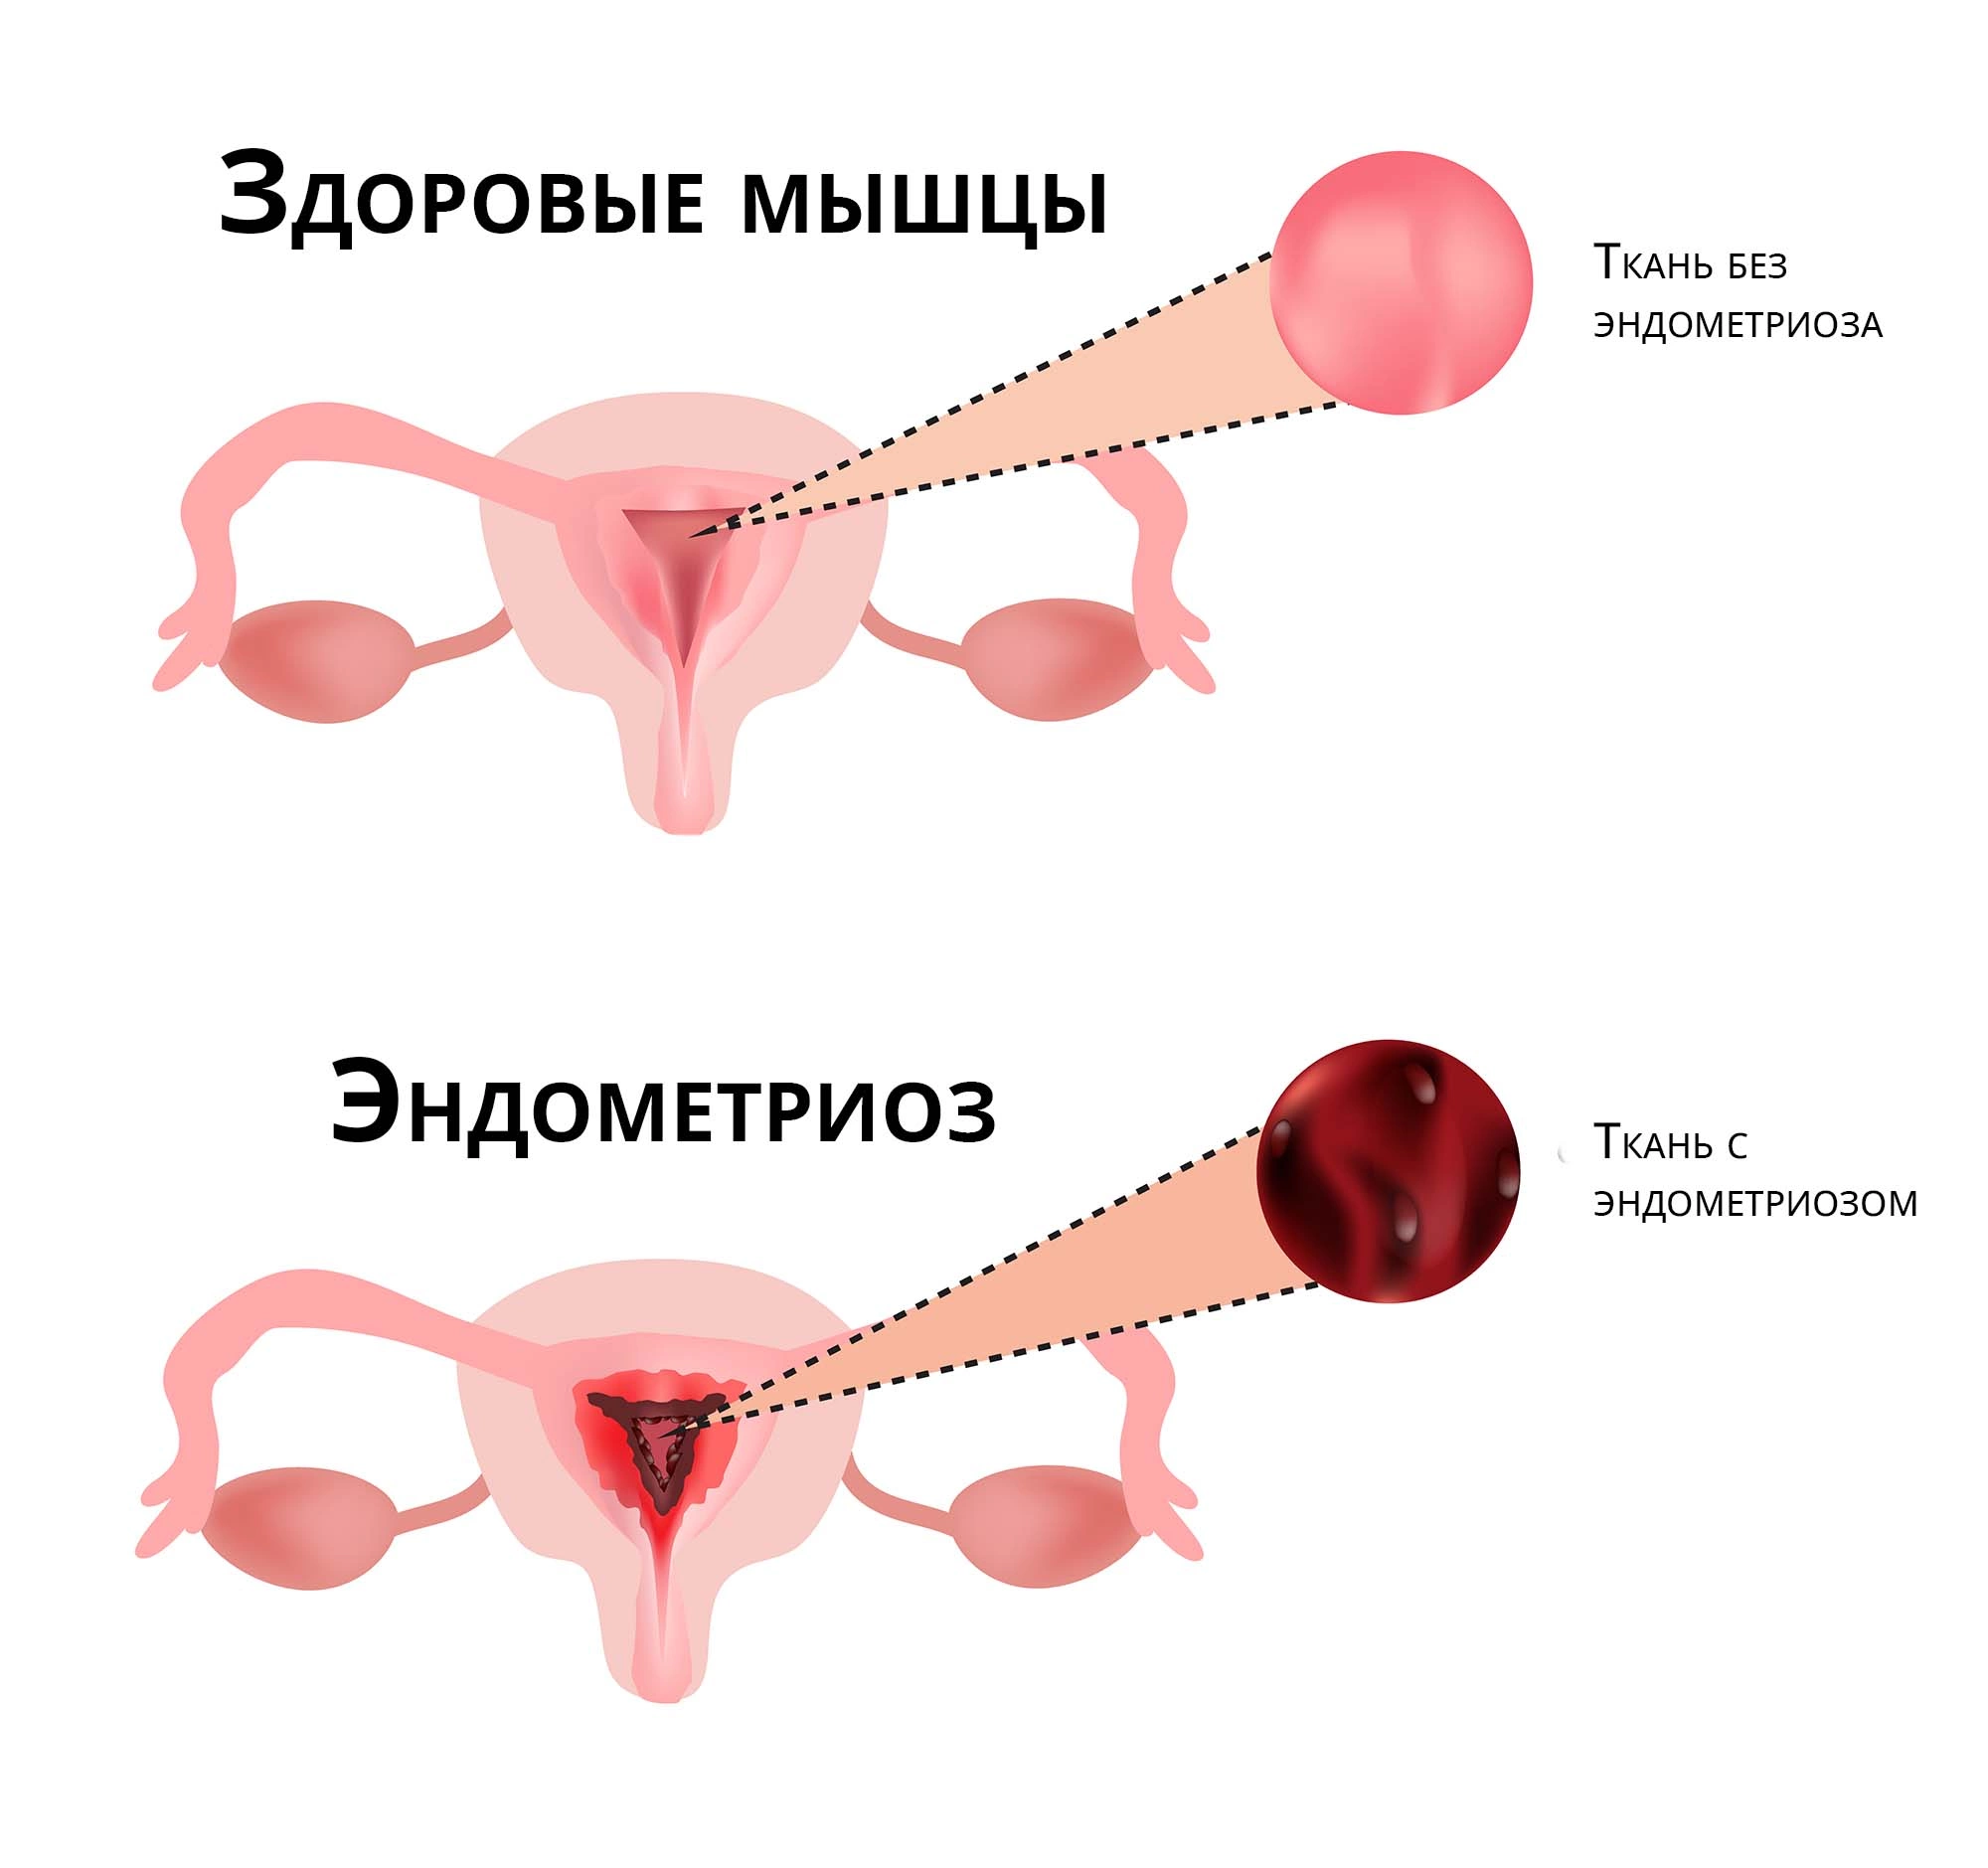 Эндометриоз при климаксе (в менопаузе): симптомы, лечение, проходит ли